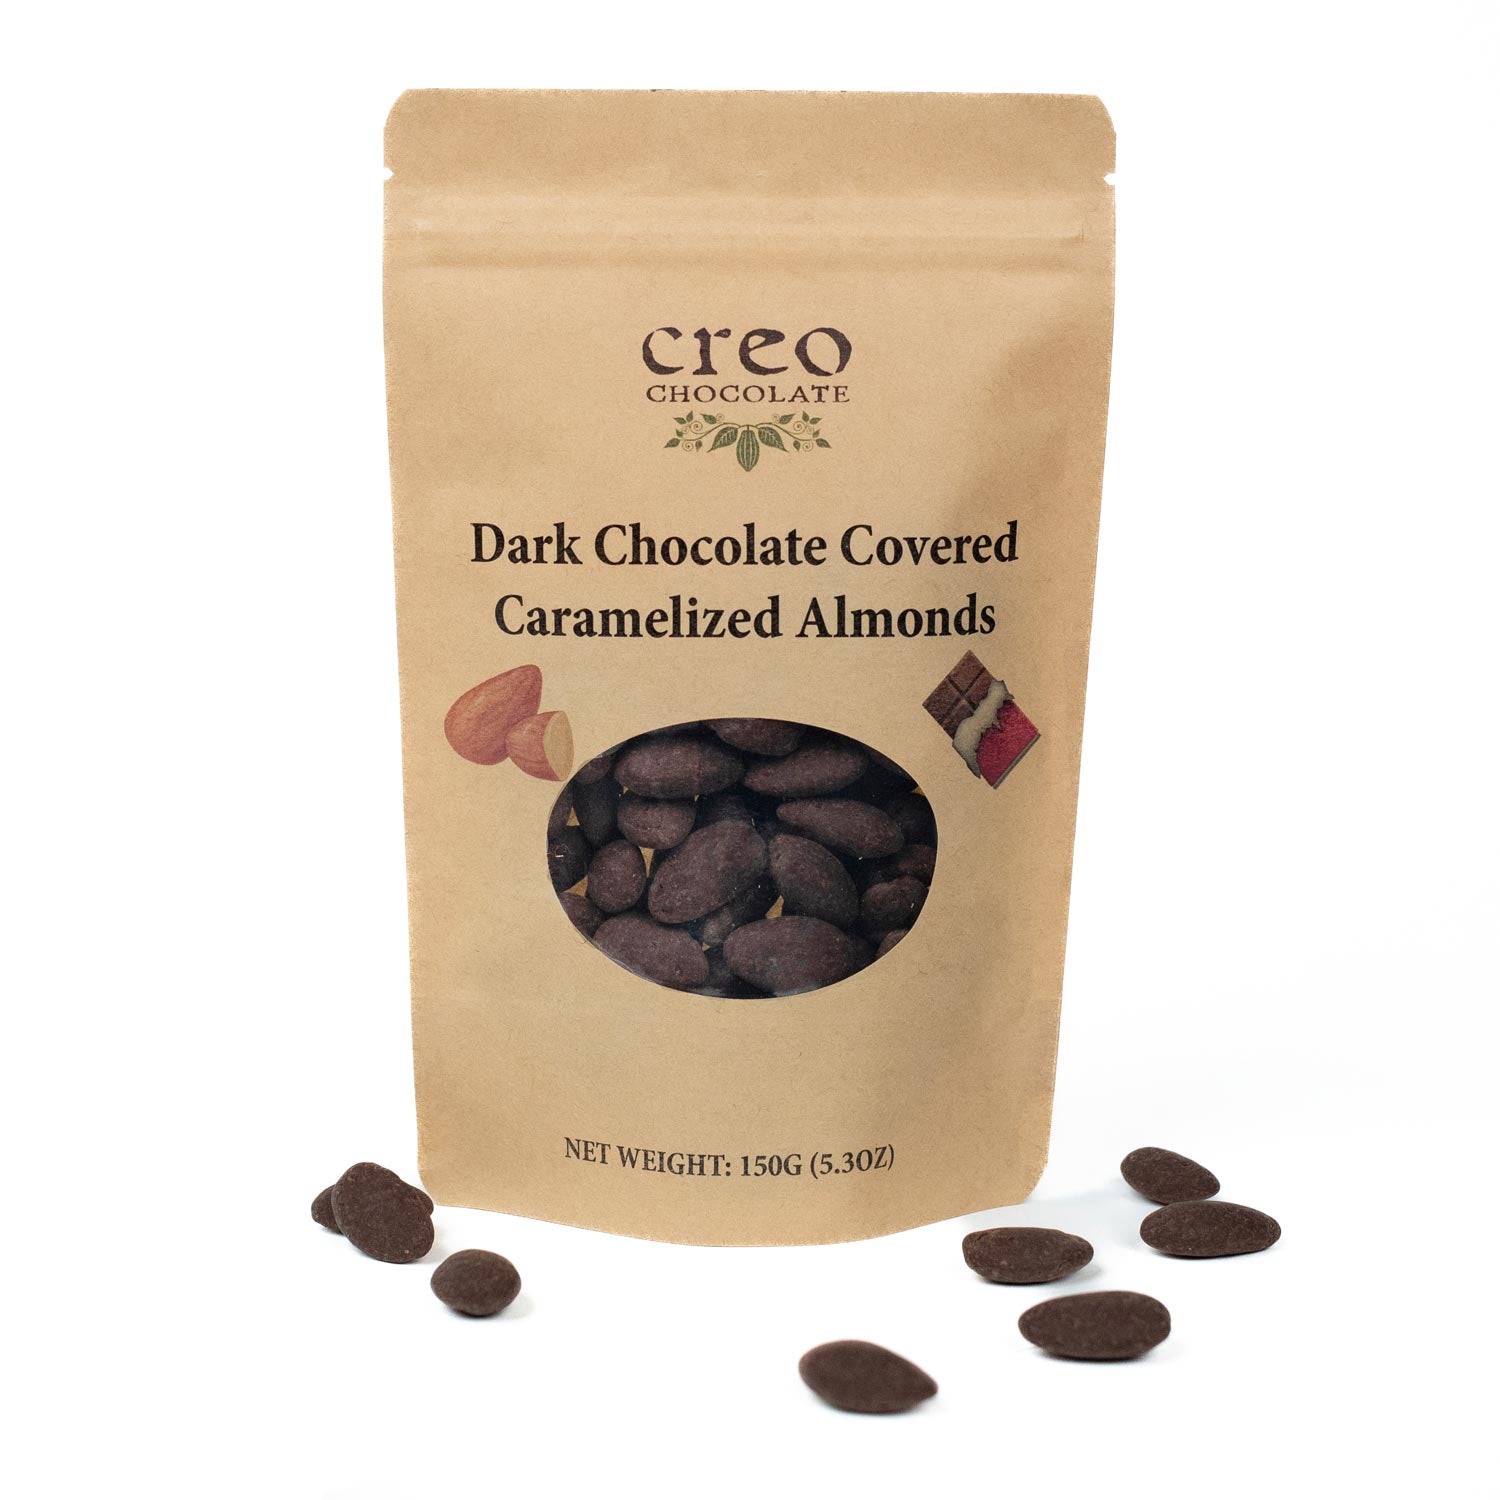 Dark Chocolate Covered Caramelized Almonds